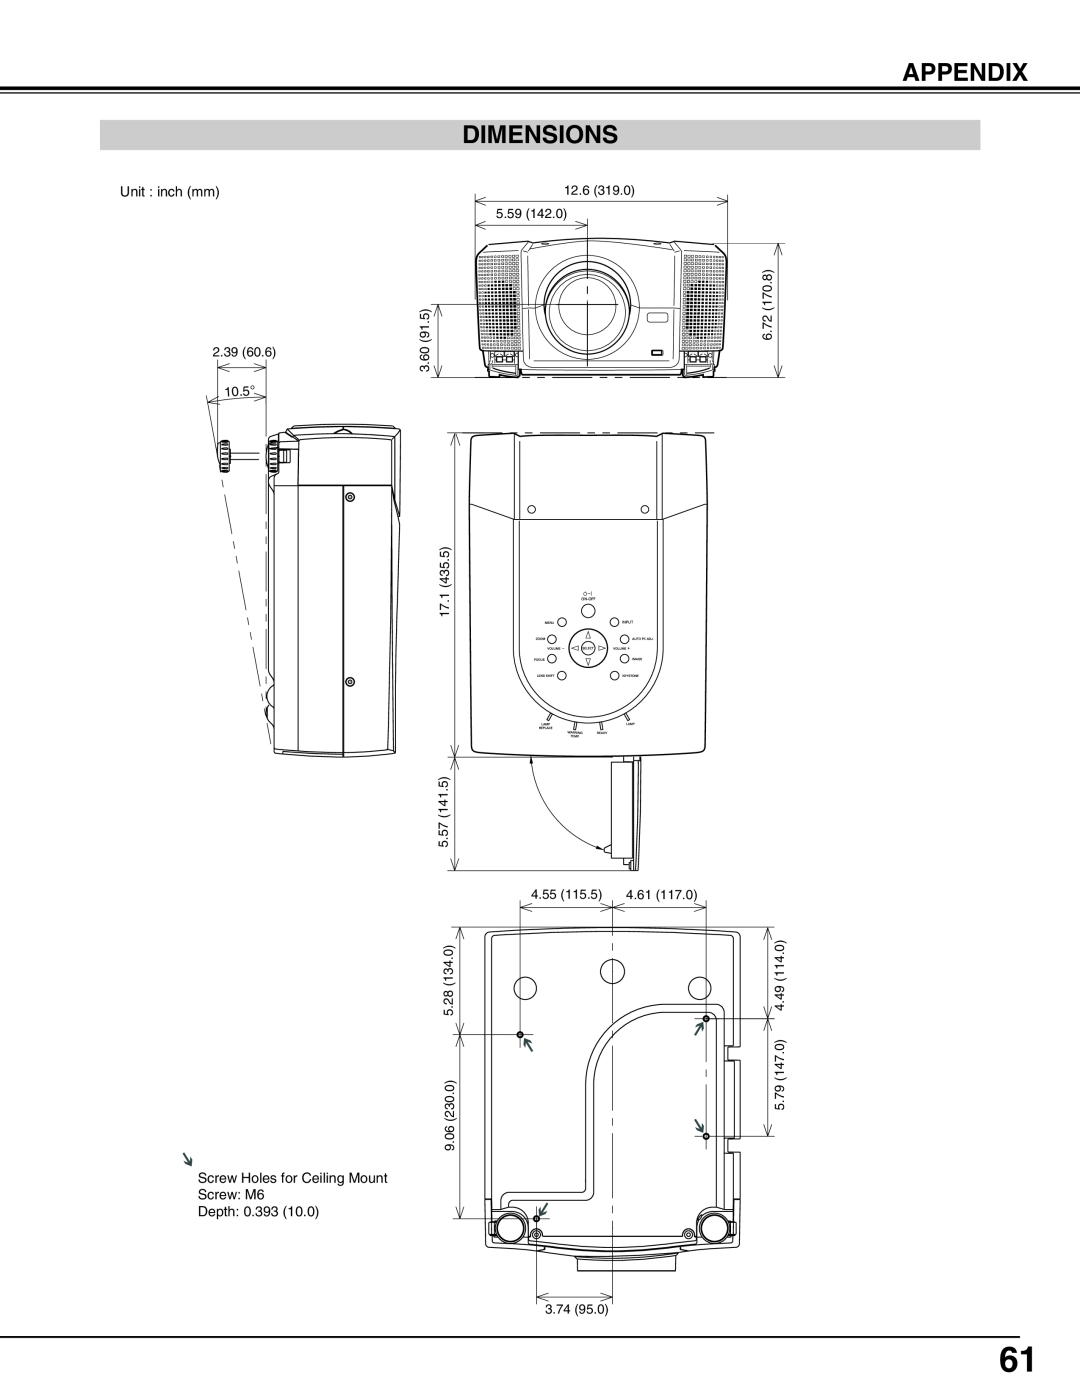 Eiki LC-X71L owner manual Appendix, Dimensions, Unit inch mm, Screw Holes for Ceiling Mount Screw M6 Depth 